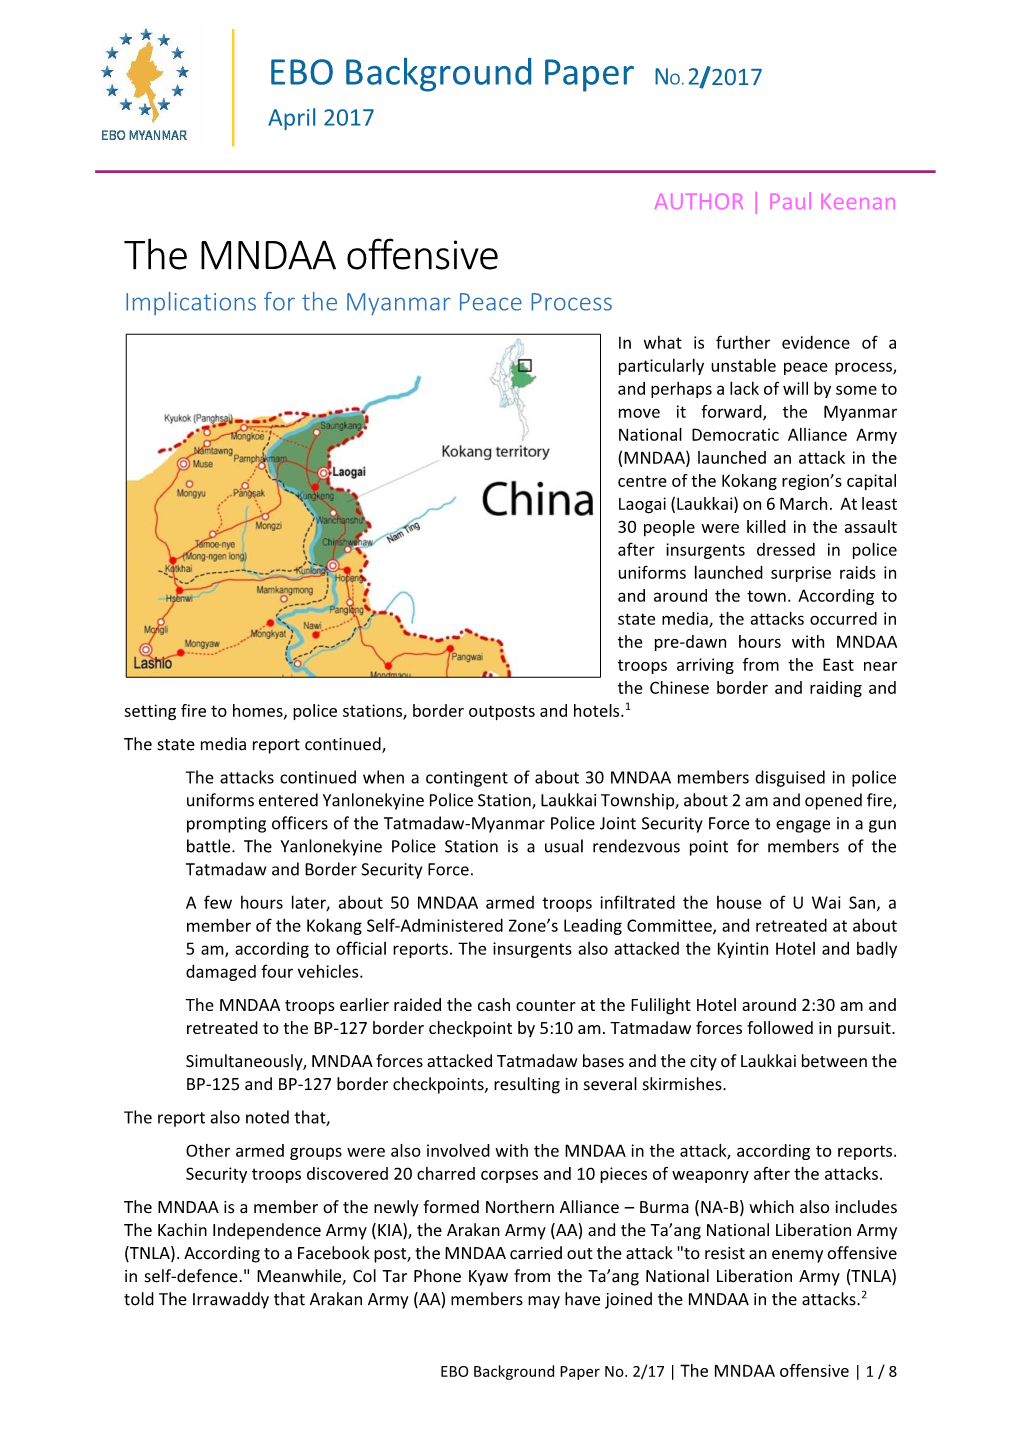 The MNDAA Offensive